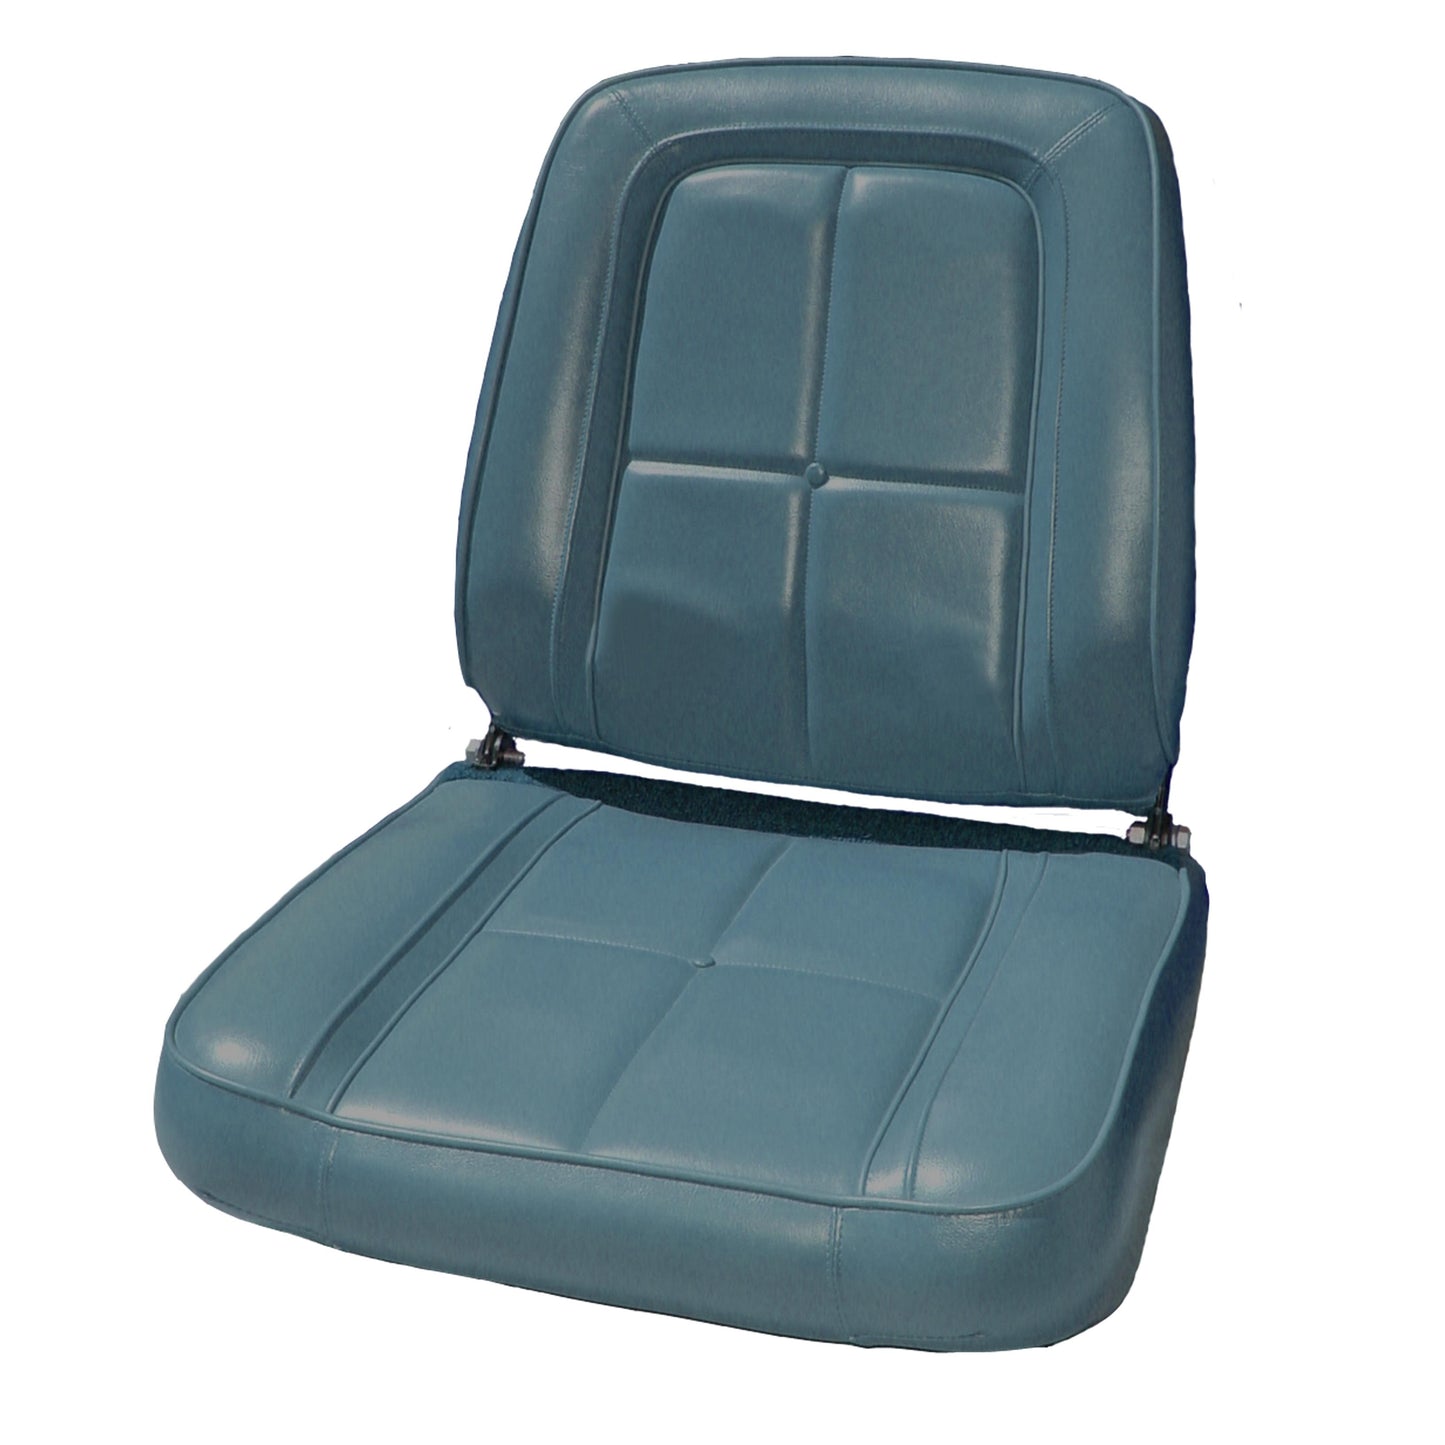 63 DART GT BUCKET SEAT UPHOLSTERY - BLUE